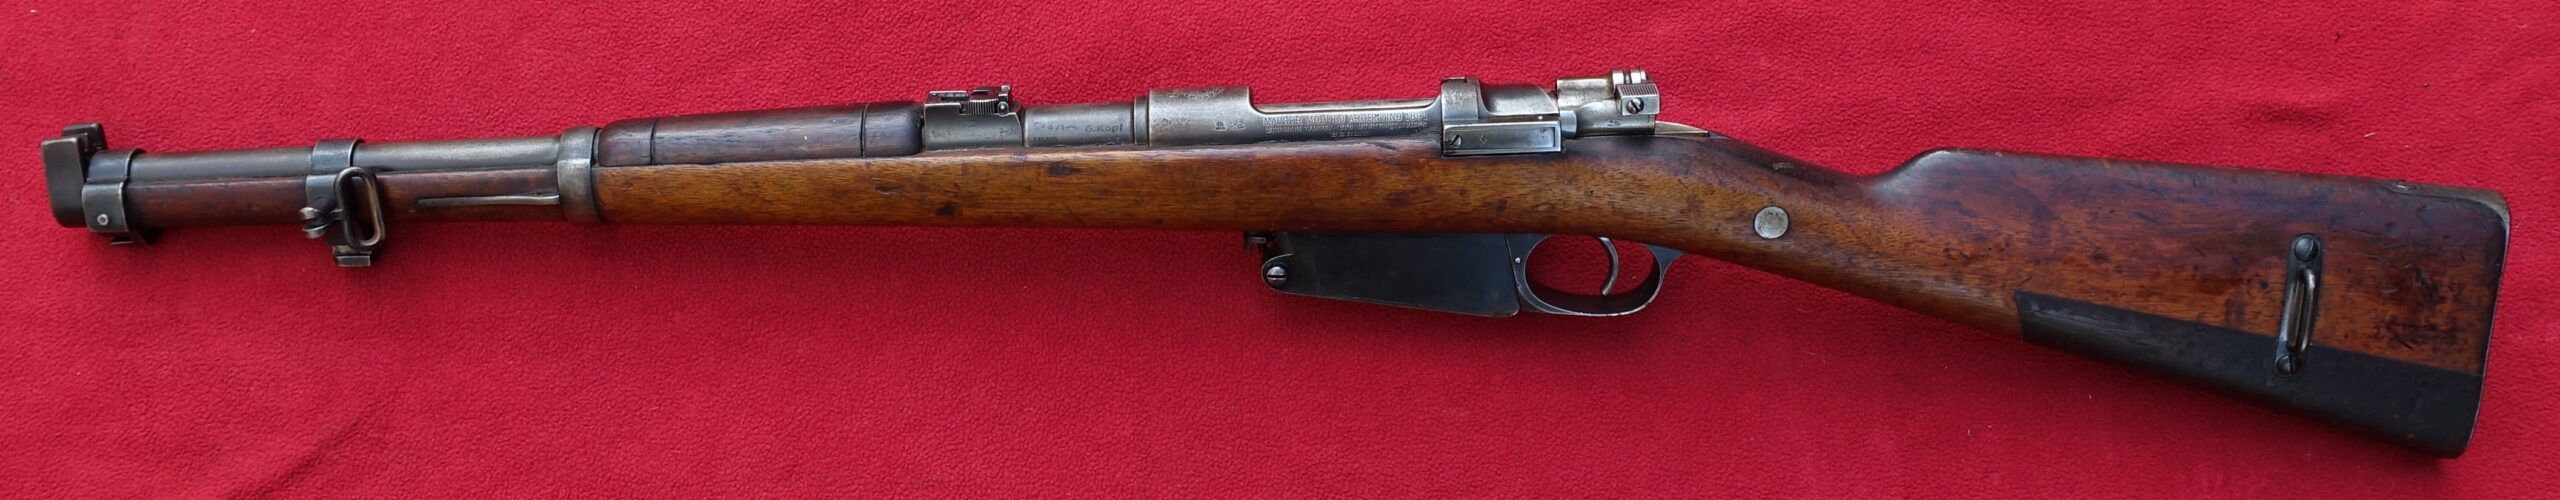 Mauser model 1891 zavedený v Argentinské armádě od roku 1891 v ráži 7,65x53...